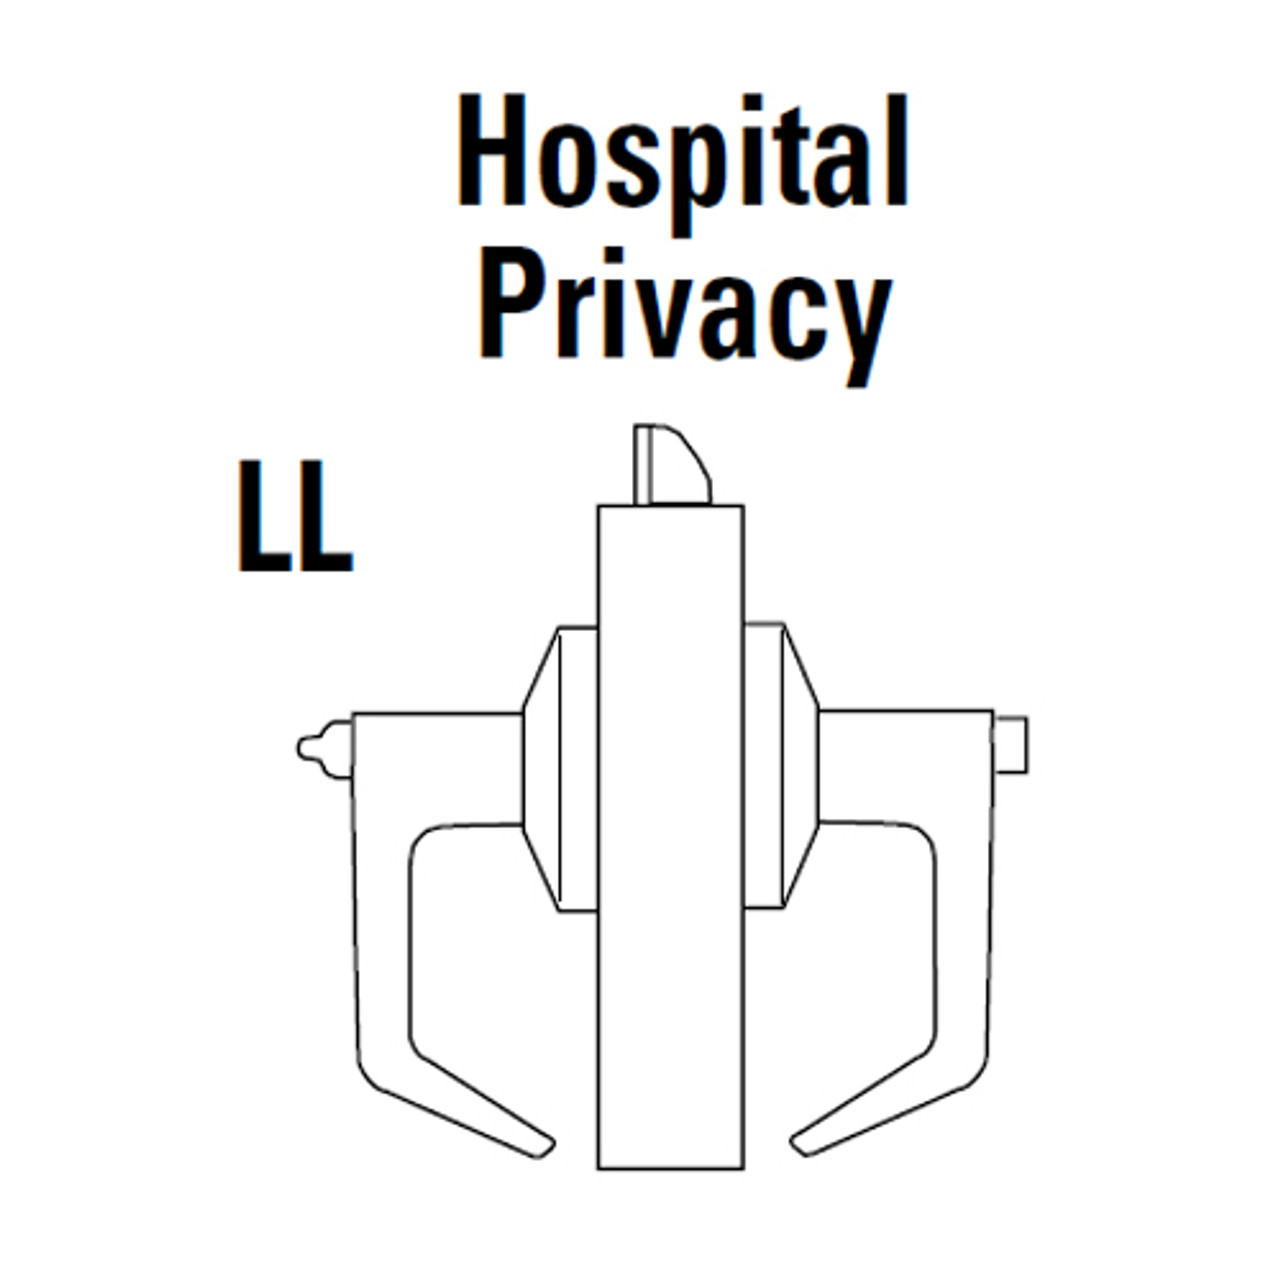 9K30LL14KS3619 Best 9K Series Hospital Privacy Heavy Duty Cylindrical Lever Locks in Satin Nickel